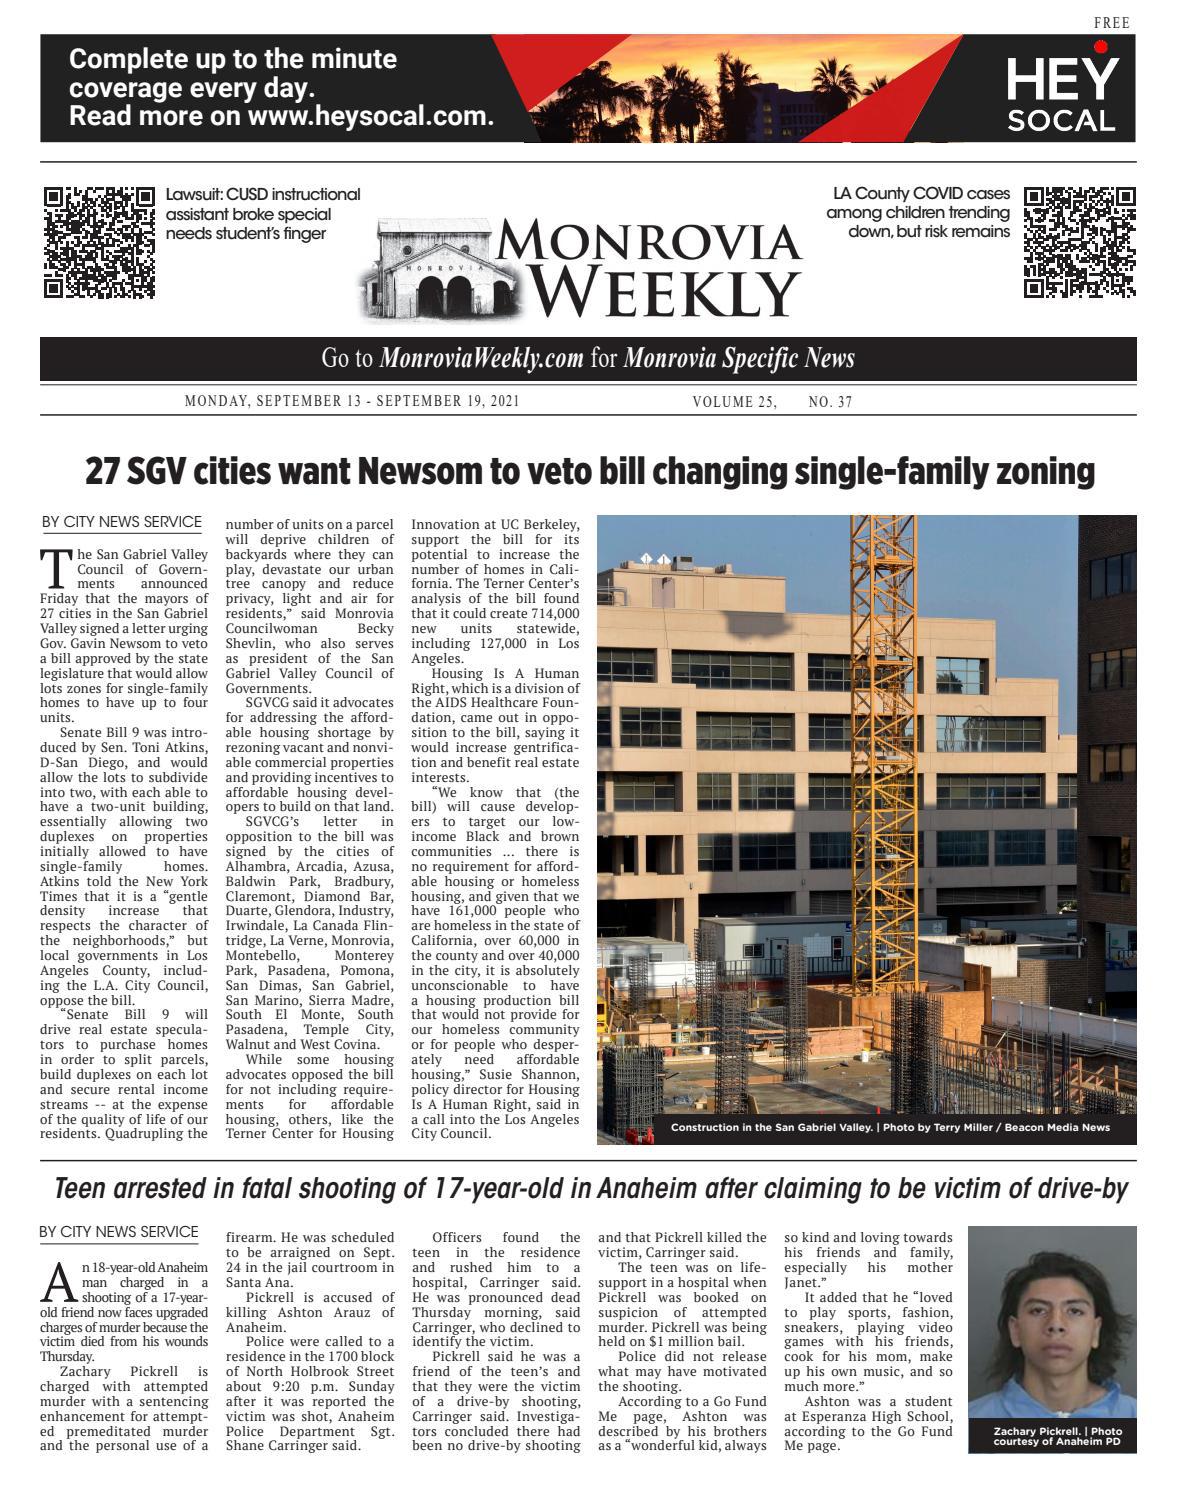 Monrovia Weekly-9/13/2021